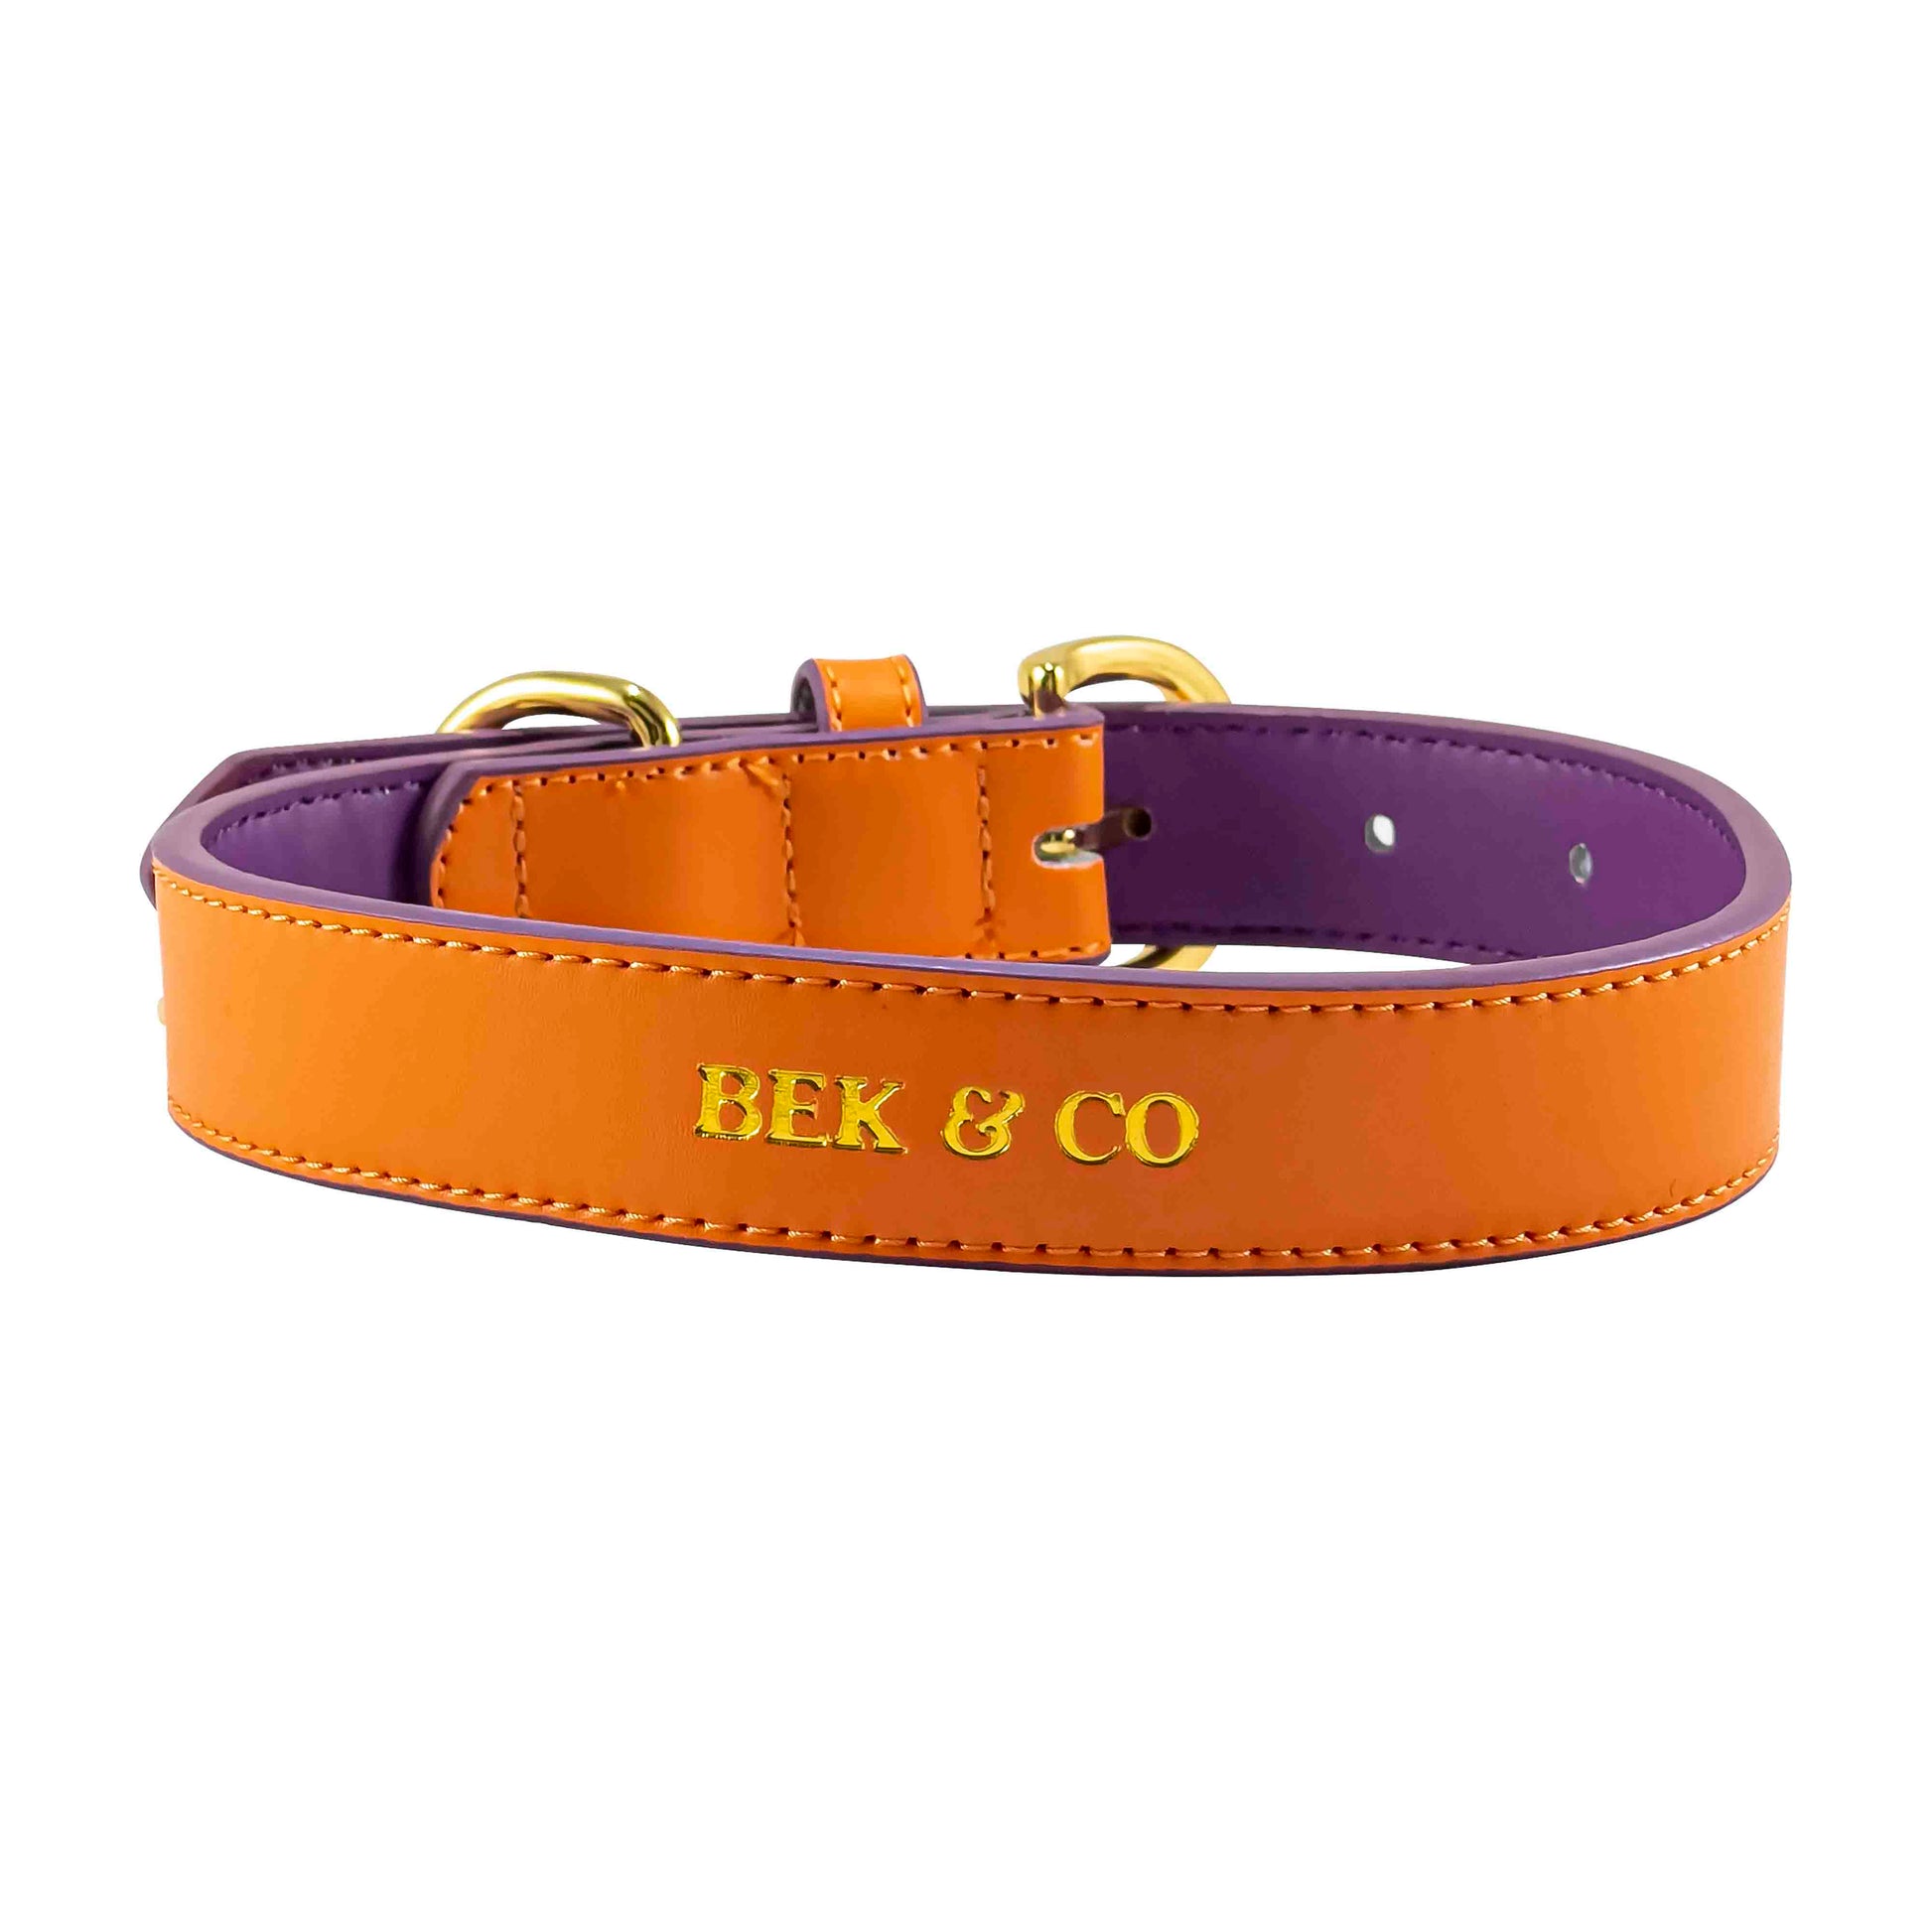 Bek & Co Regal Orange Leather French Bulldog collar on white background showing embossed logo